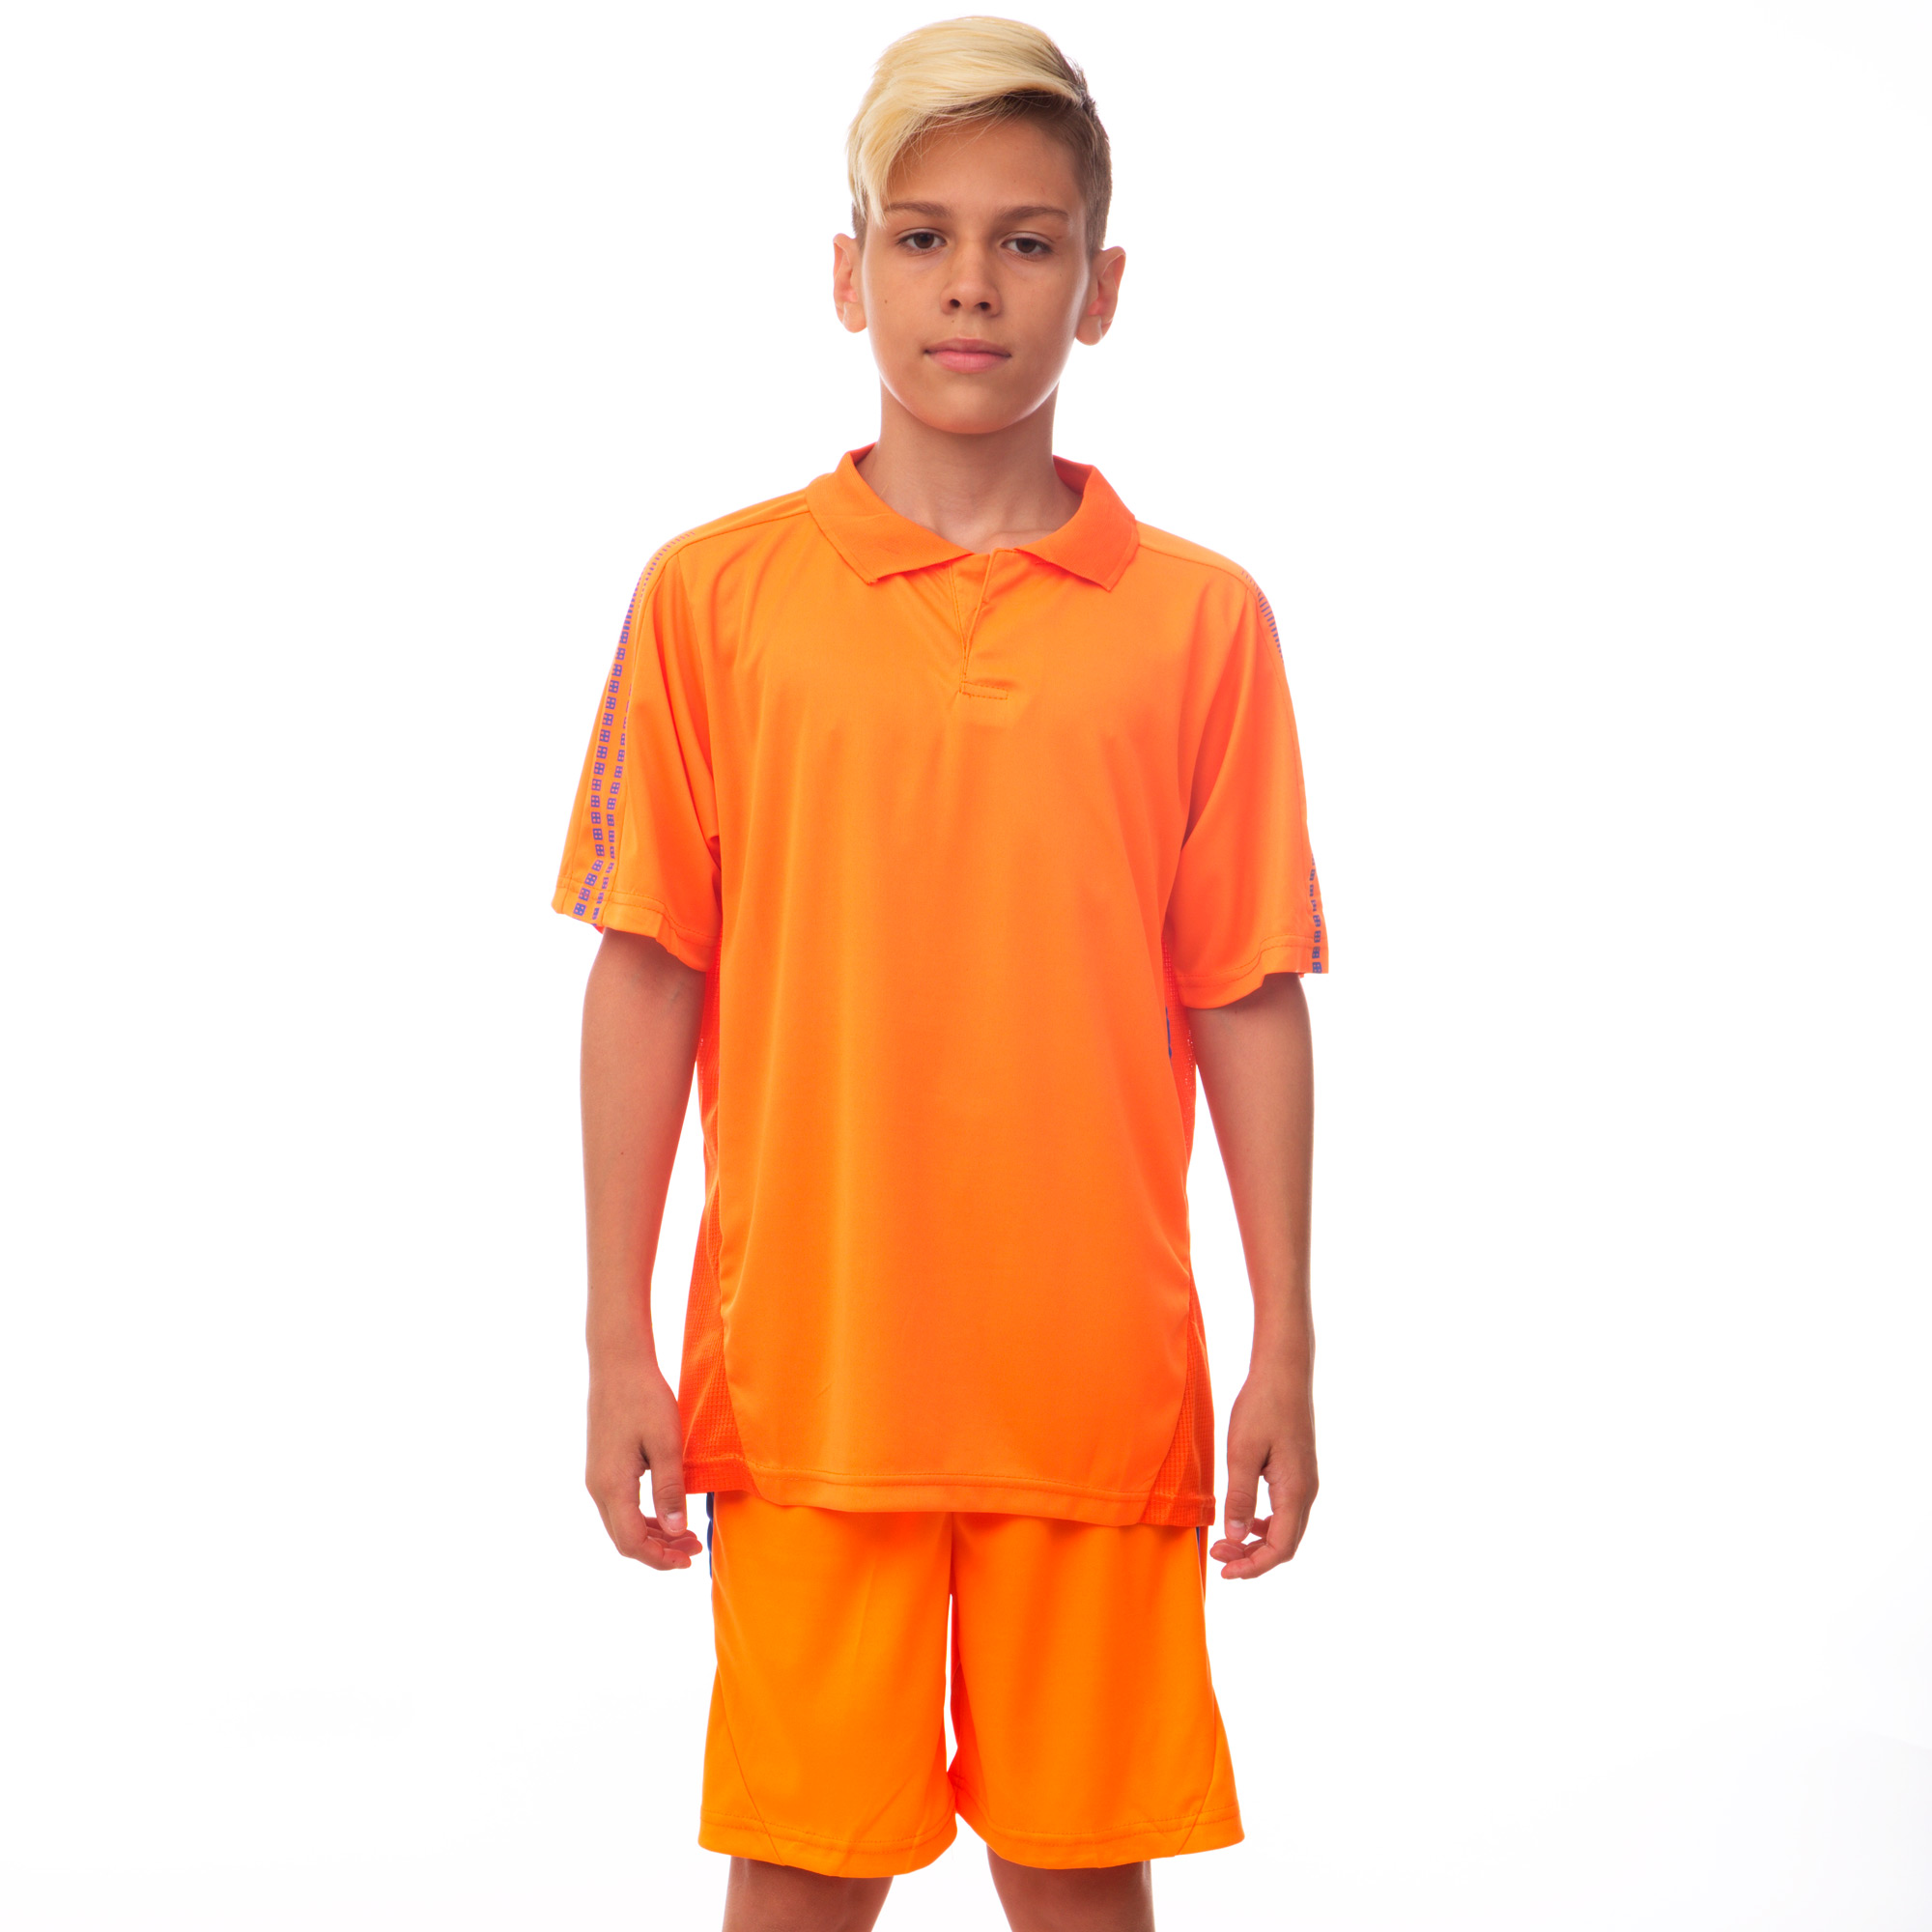 Футбольная форма подростковая SP-Sport New game CO-4807 26 рост 130 Оранжевый